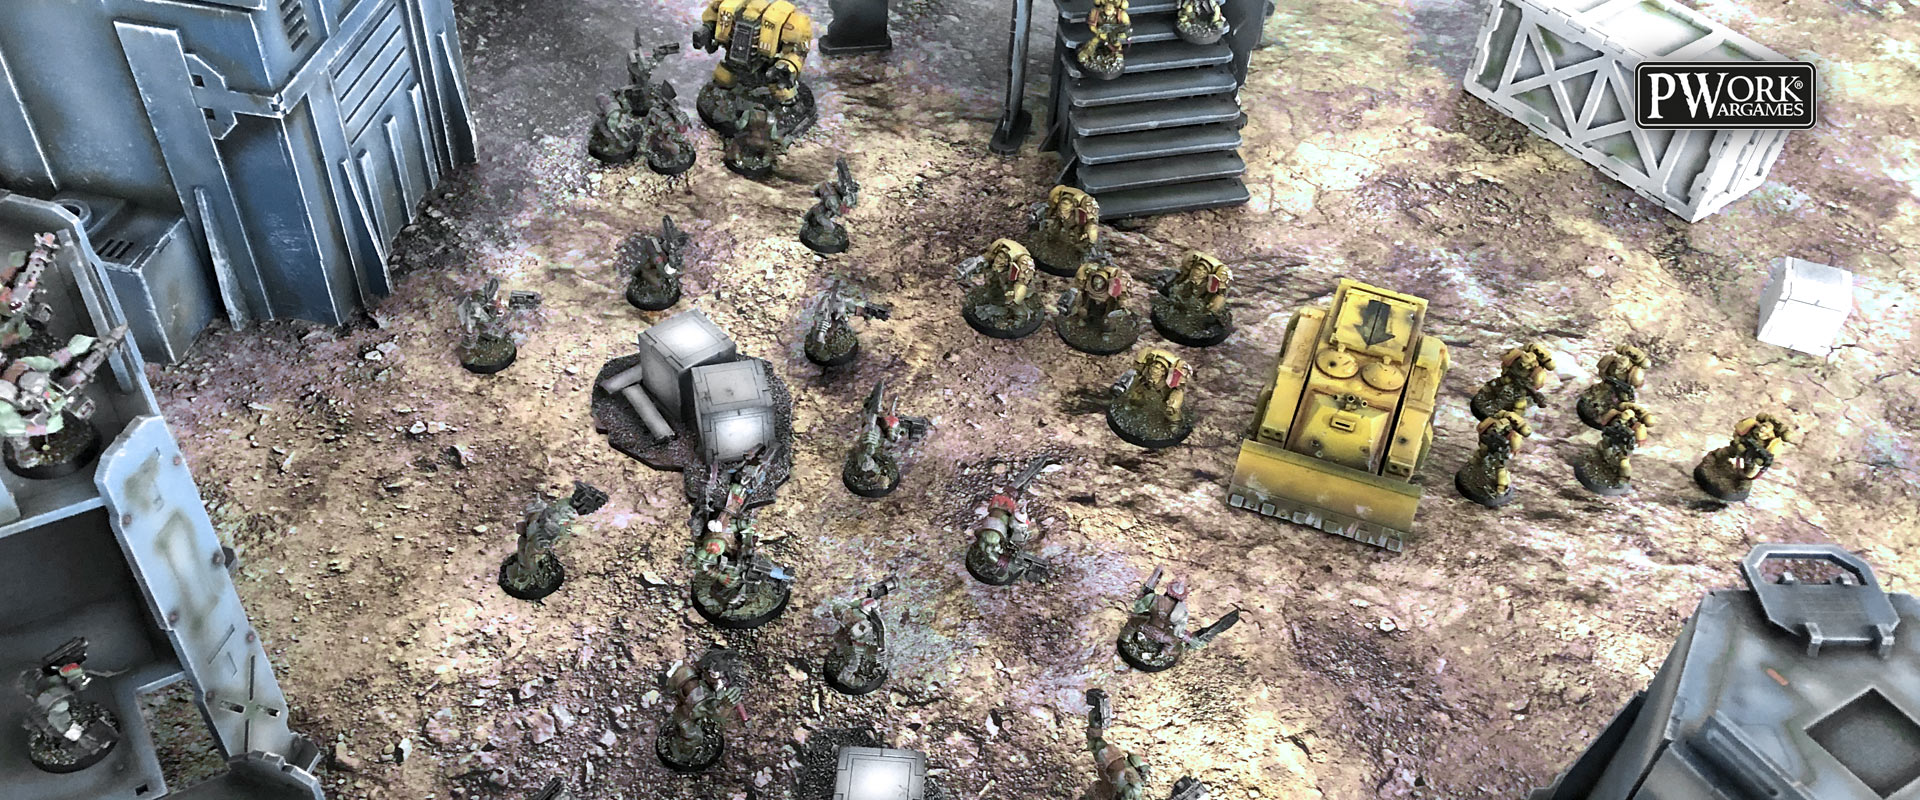 NEW RELEASE! Wasteland: Pwork Wargames fantasy game mat